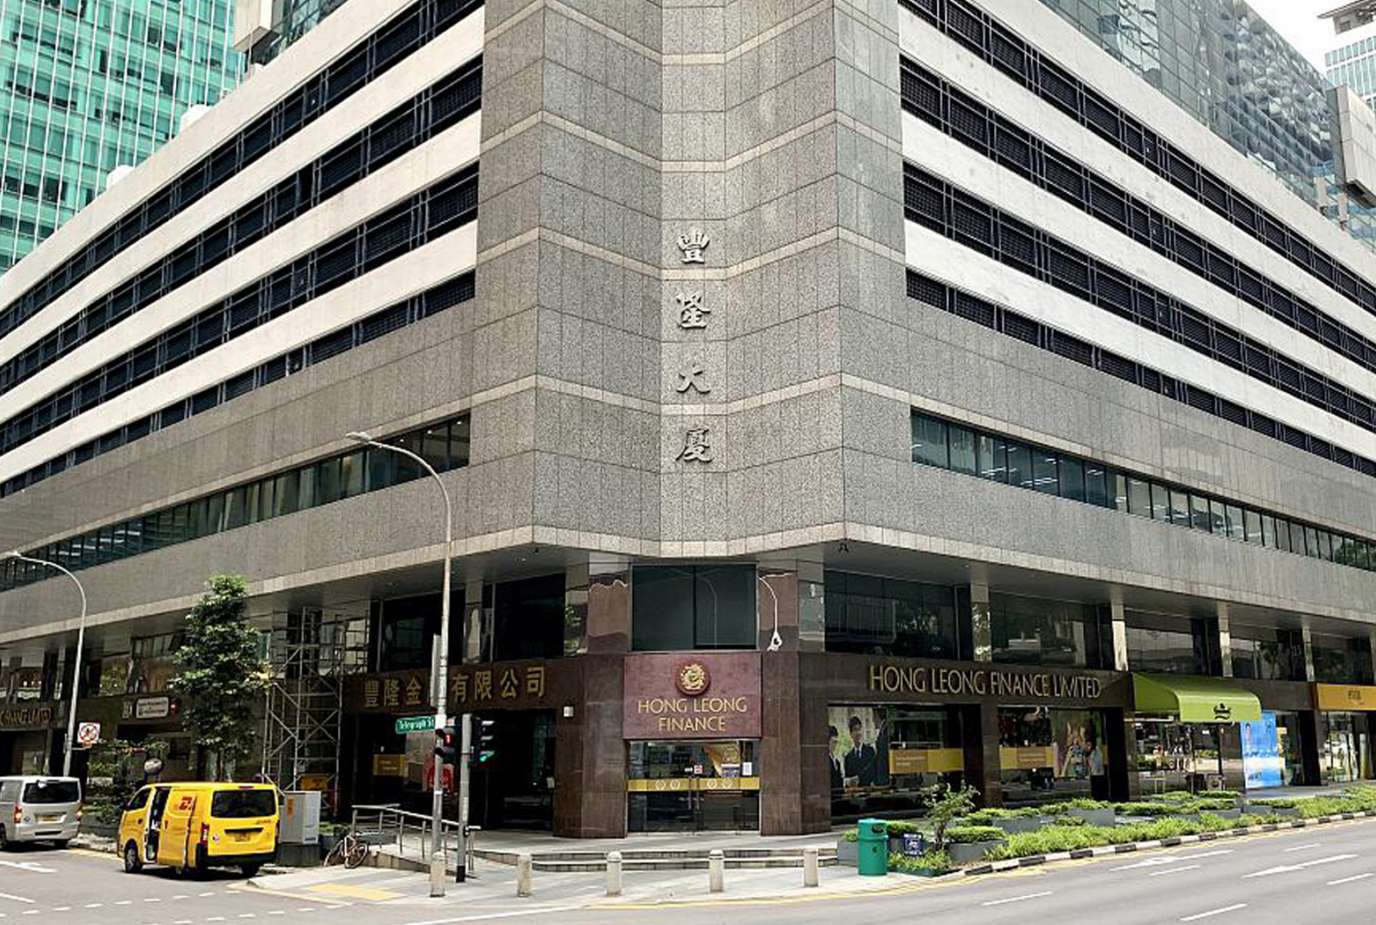 Hong Leong Building